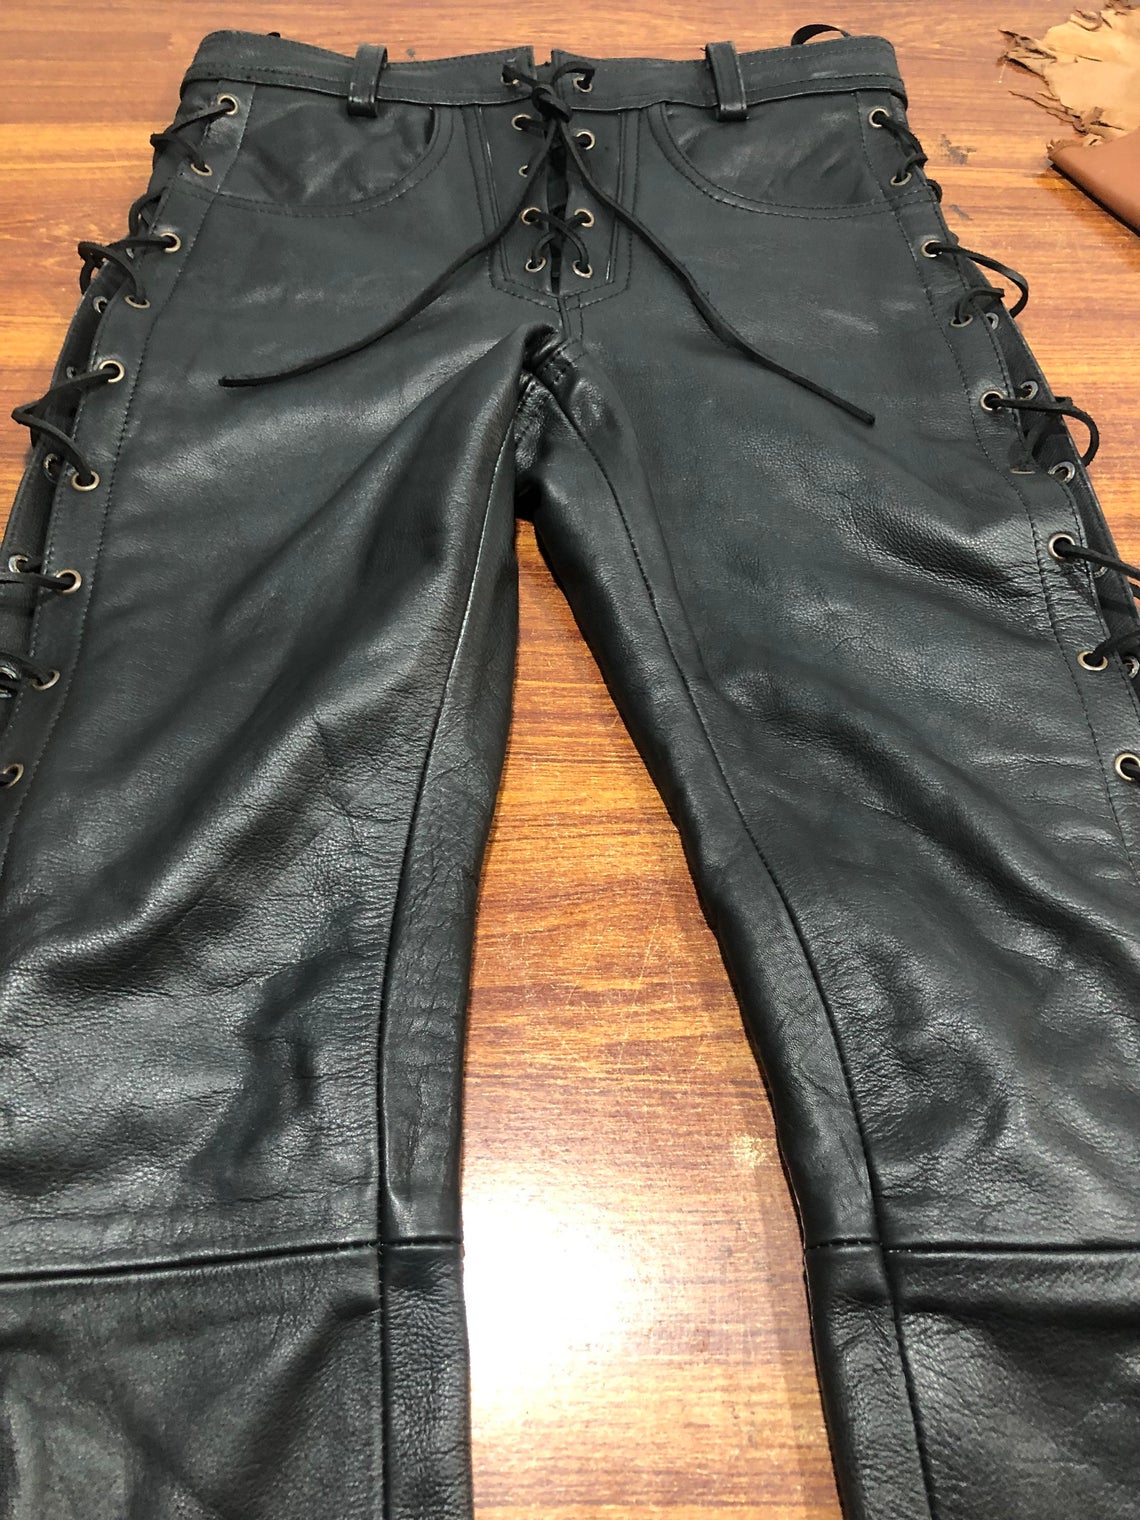 Xysaqa Men's Stretch Faux Leather Pants Slim Fit Fashion Autumn Winter Punk  Retro Goth Hip Hop Trousers Clearance - Walmart.com